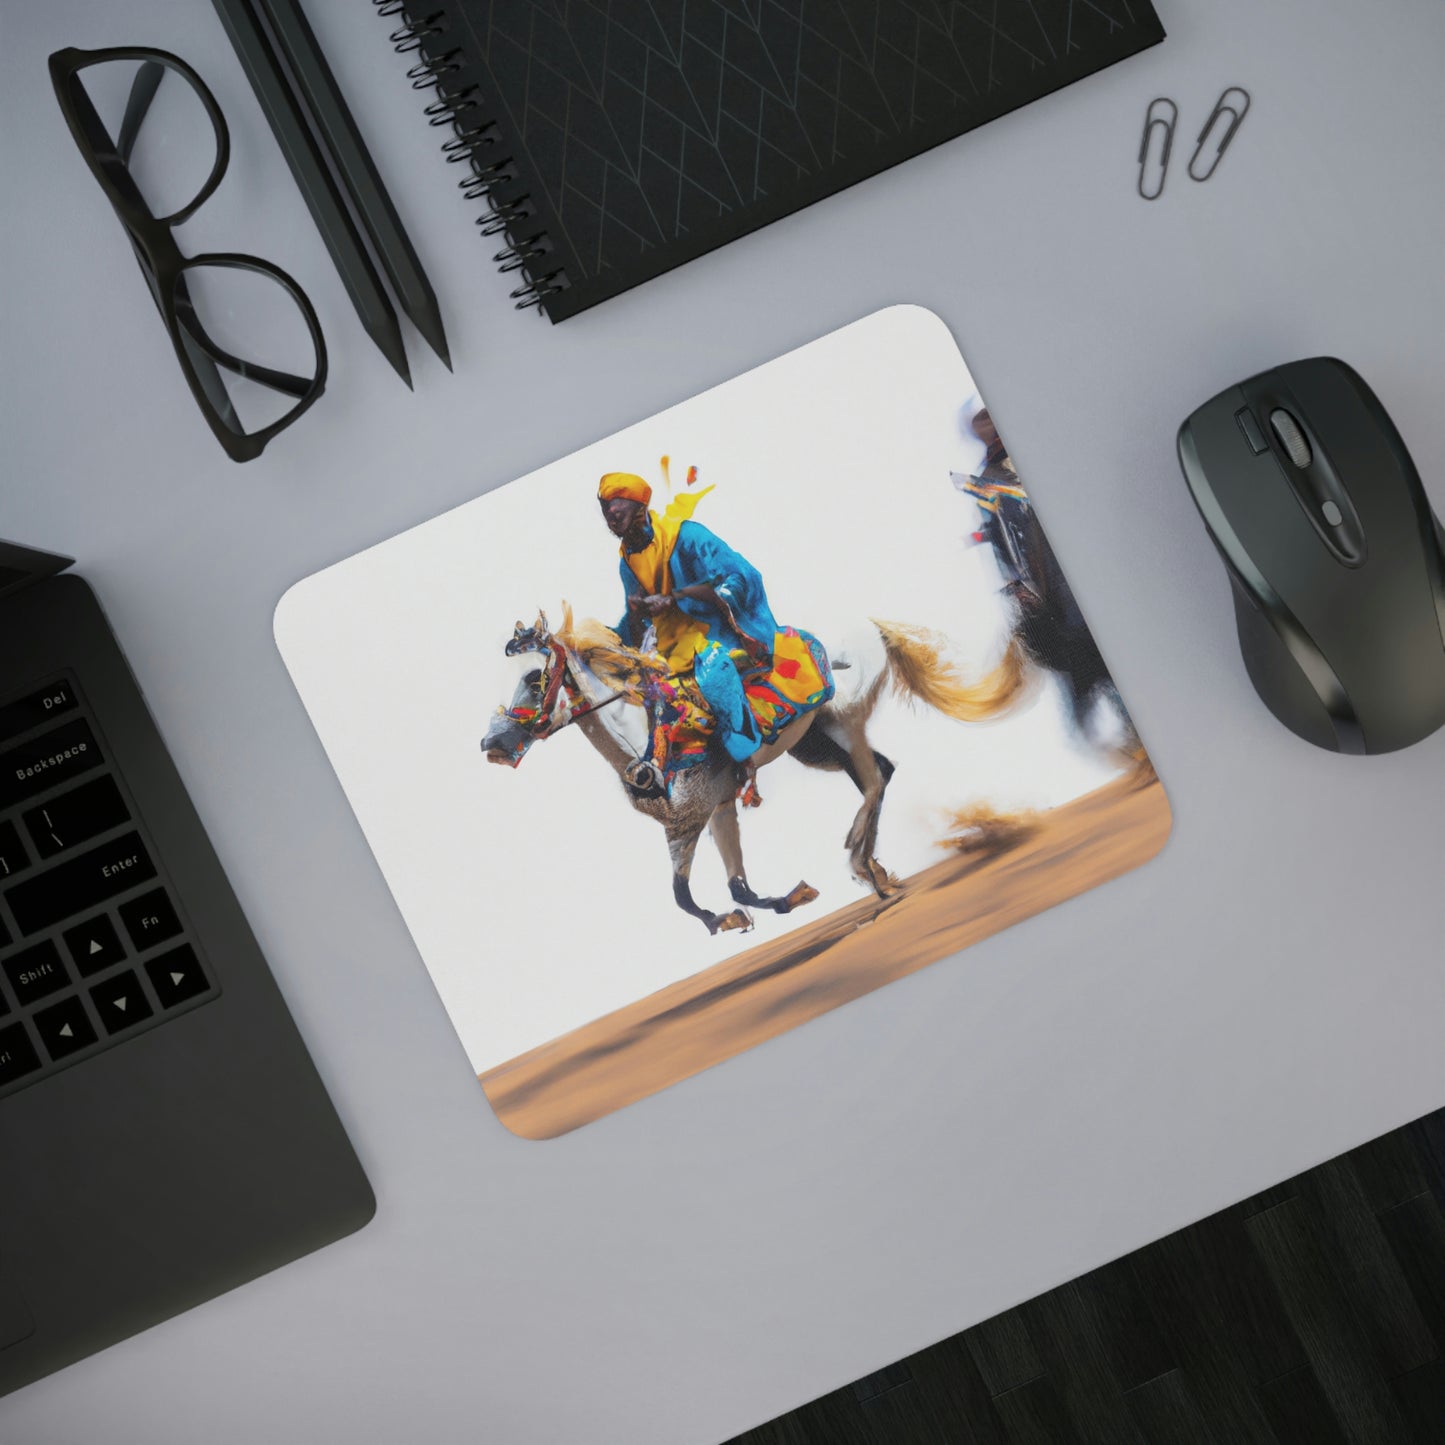 Desk Mouse Pad - Somali Horseman